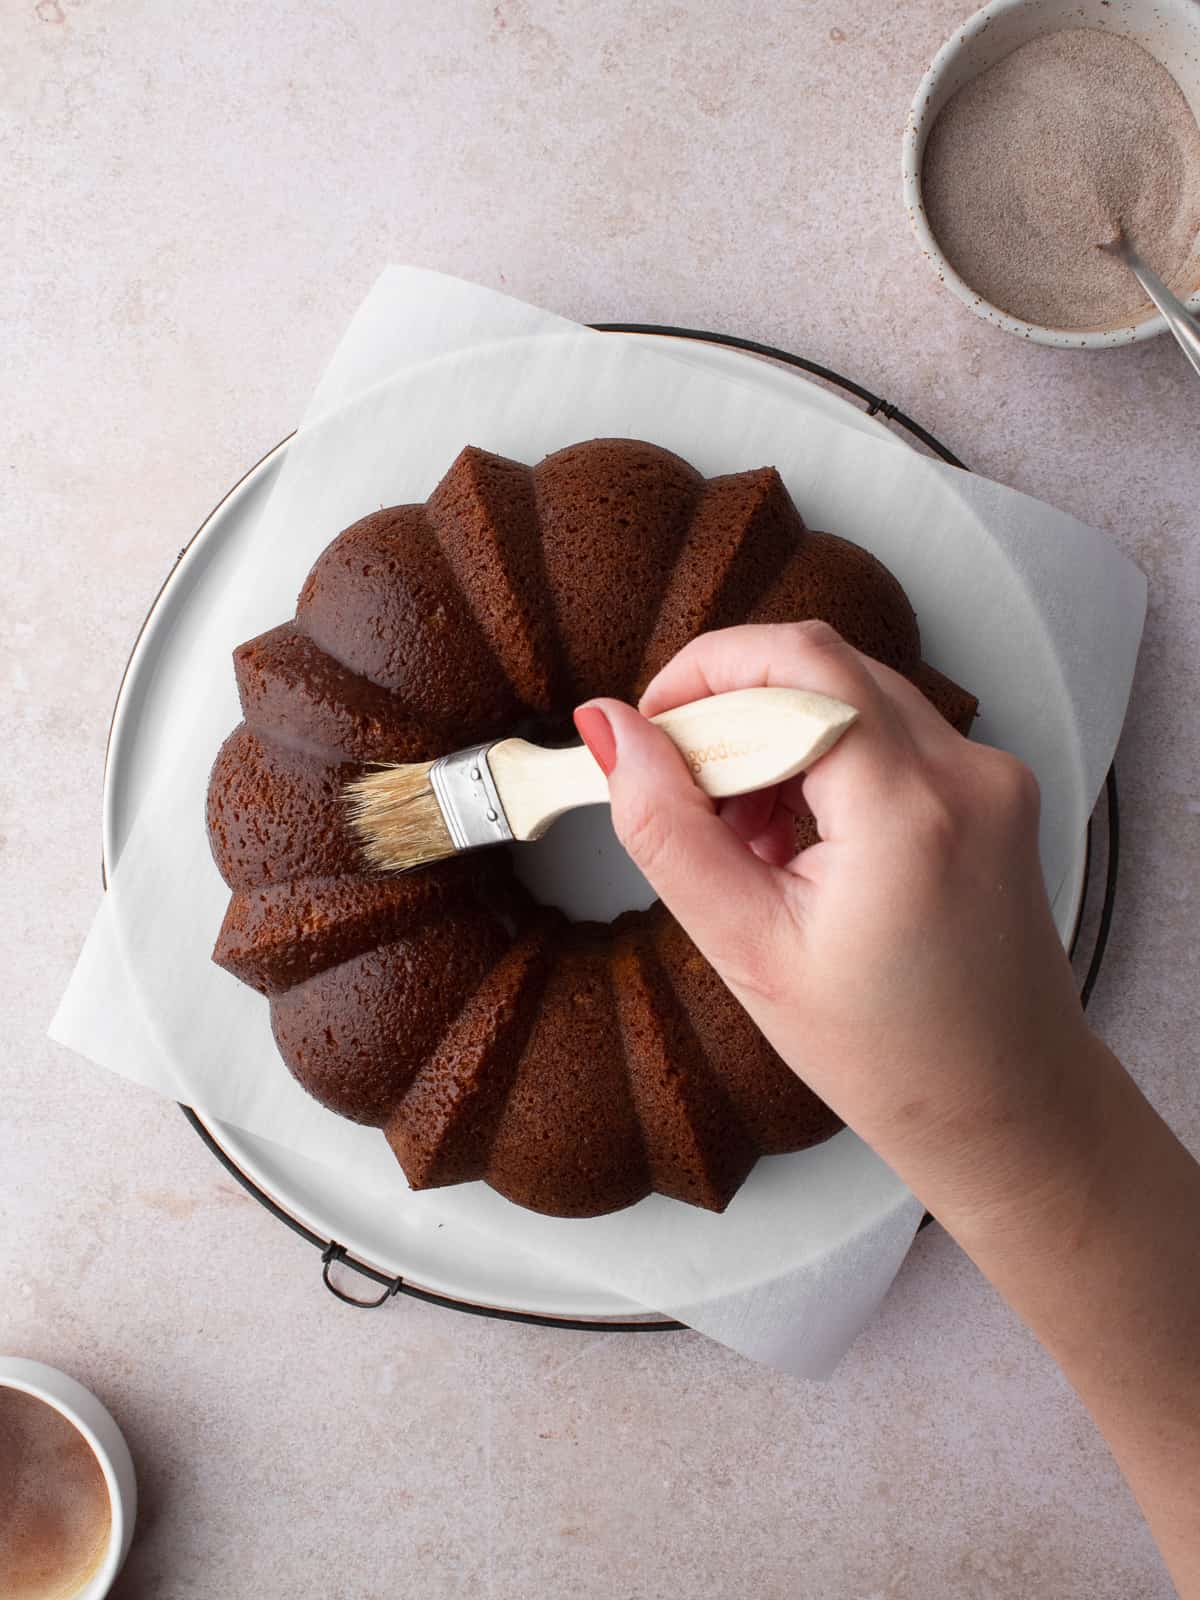 Brushing brown butter onto bundt cake